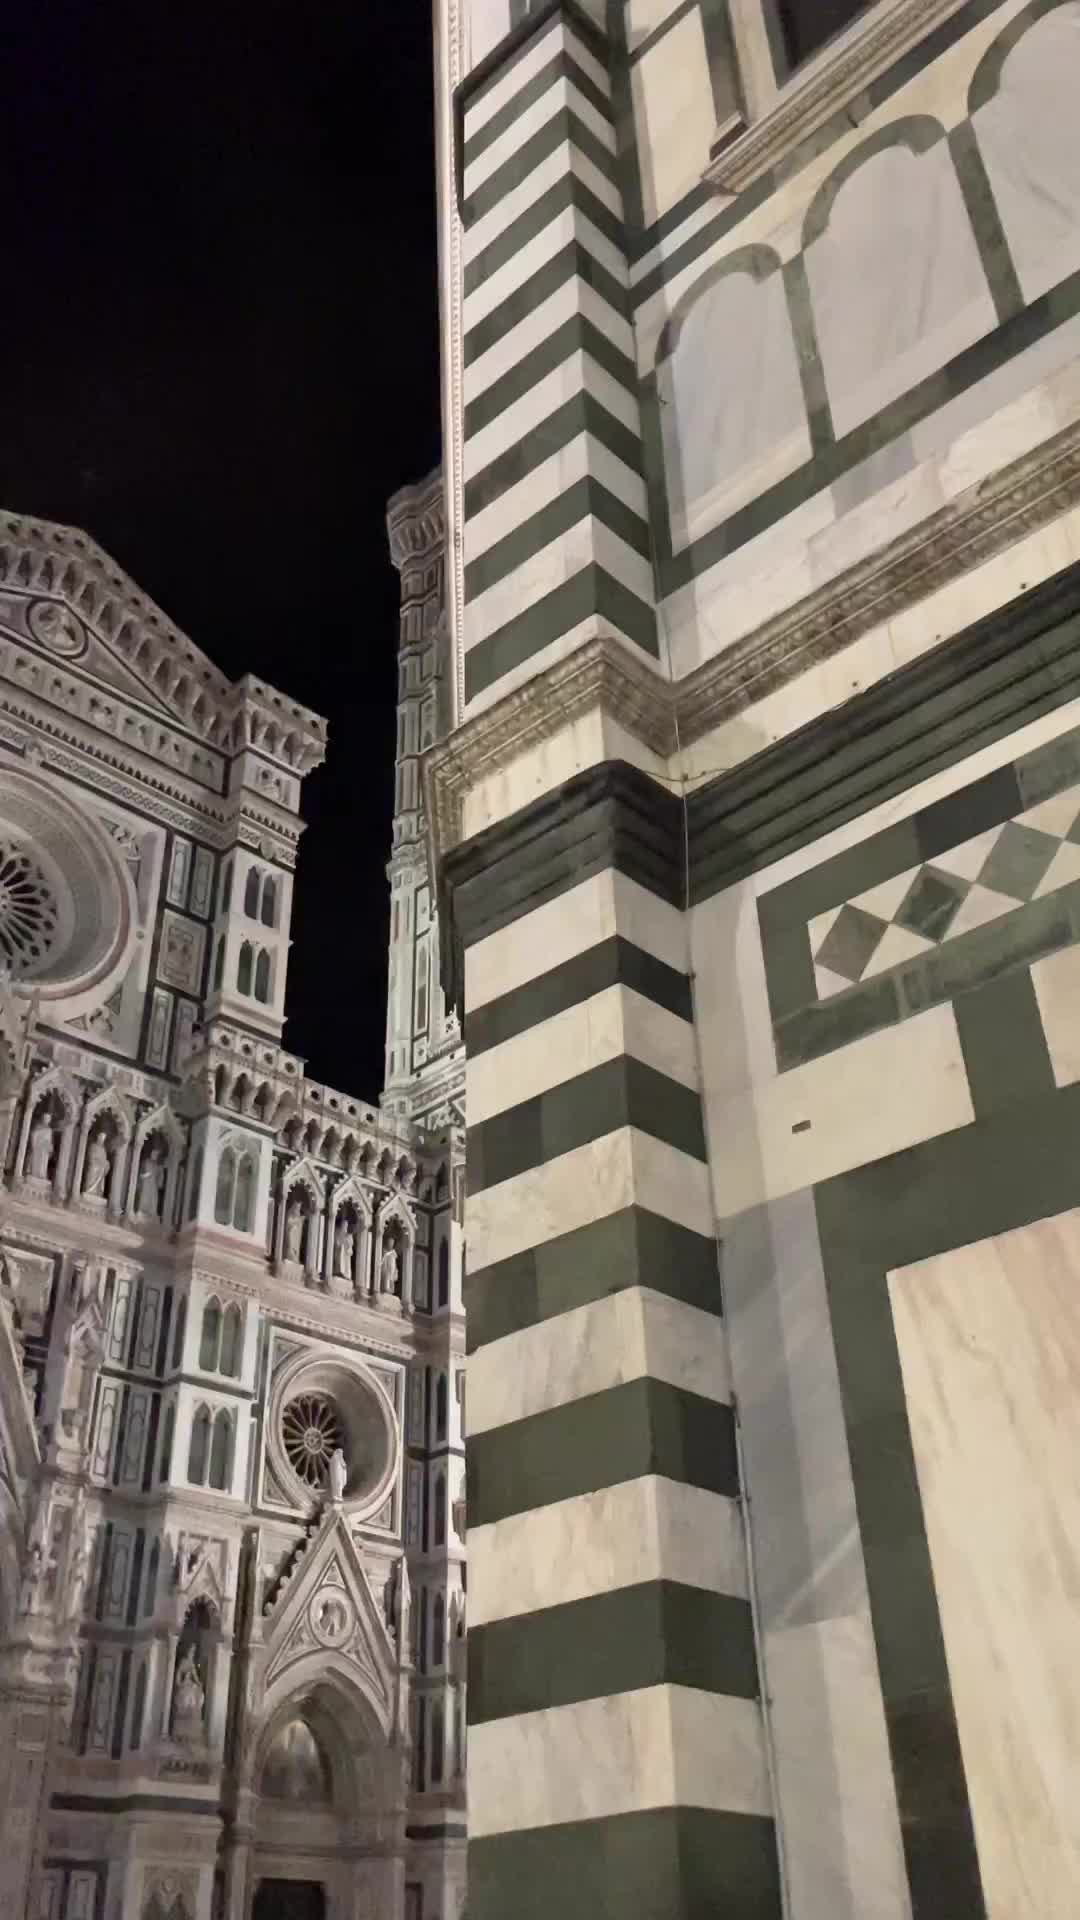 Explore Florence at Night - Stunning Duomo Di Firenze